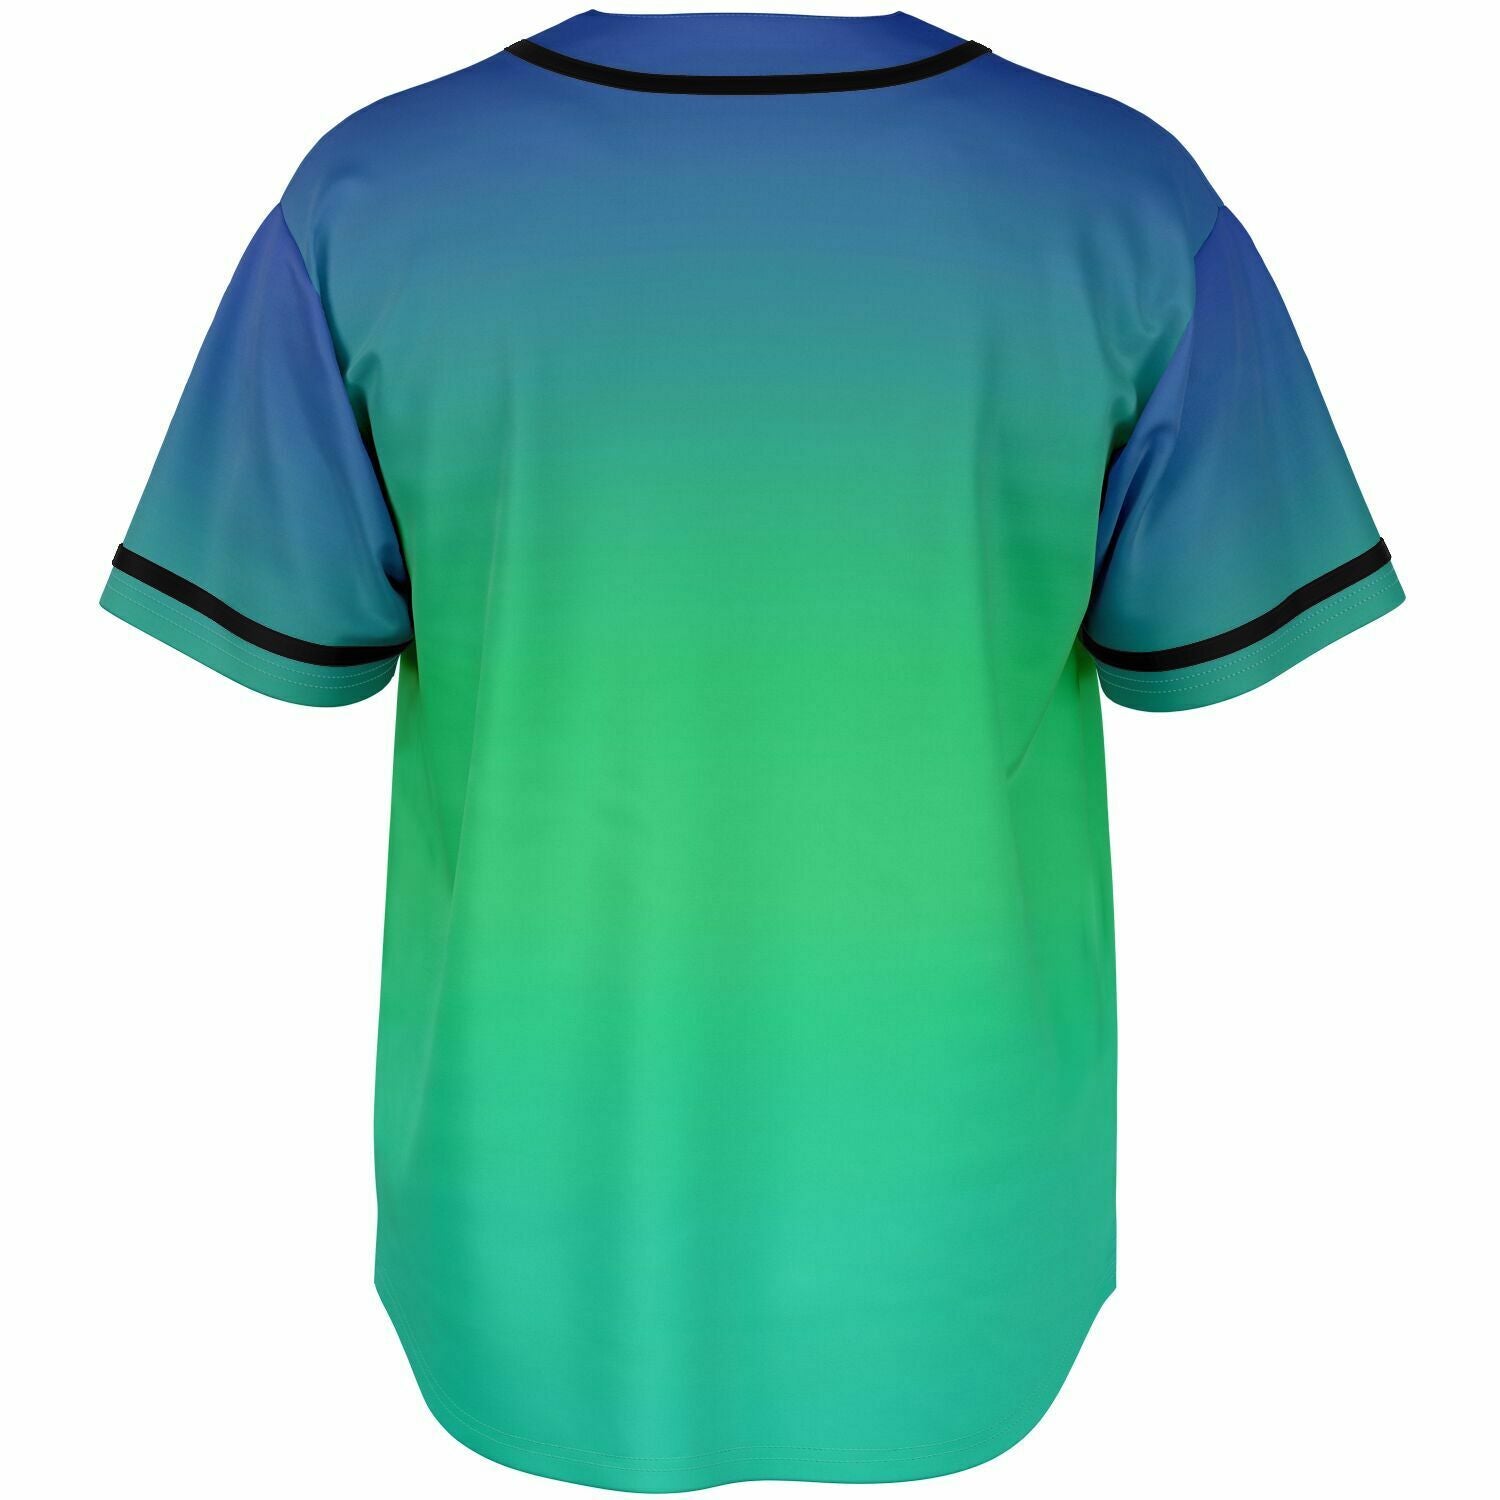 Baseball Jersey - blue green Ombre fade